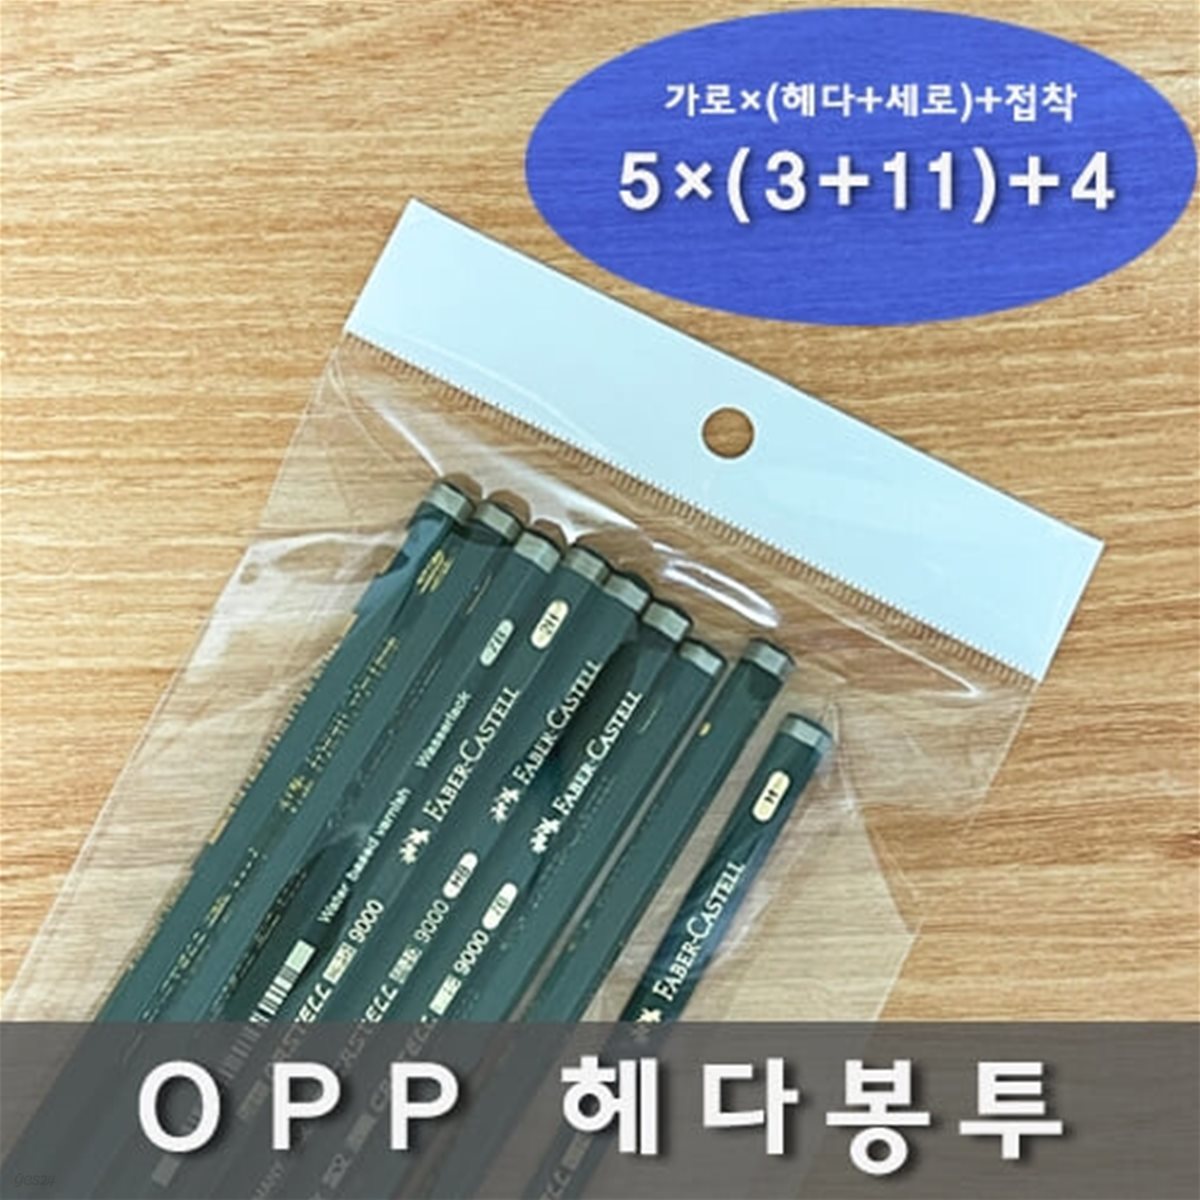 OPP 헤다봉투 5×(3+11)+4 200매